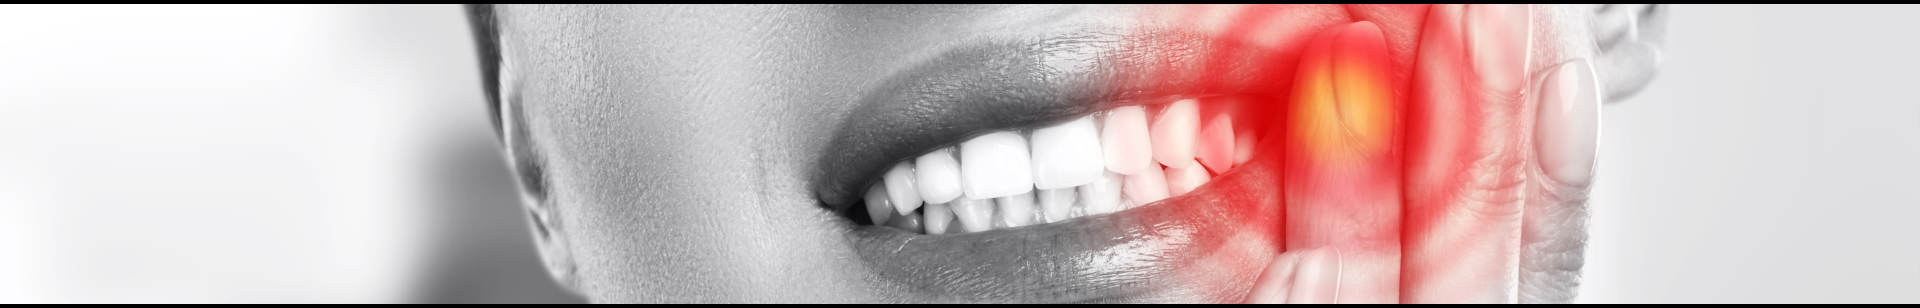 Urgence dentaire Libourne